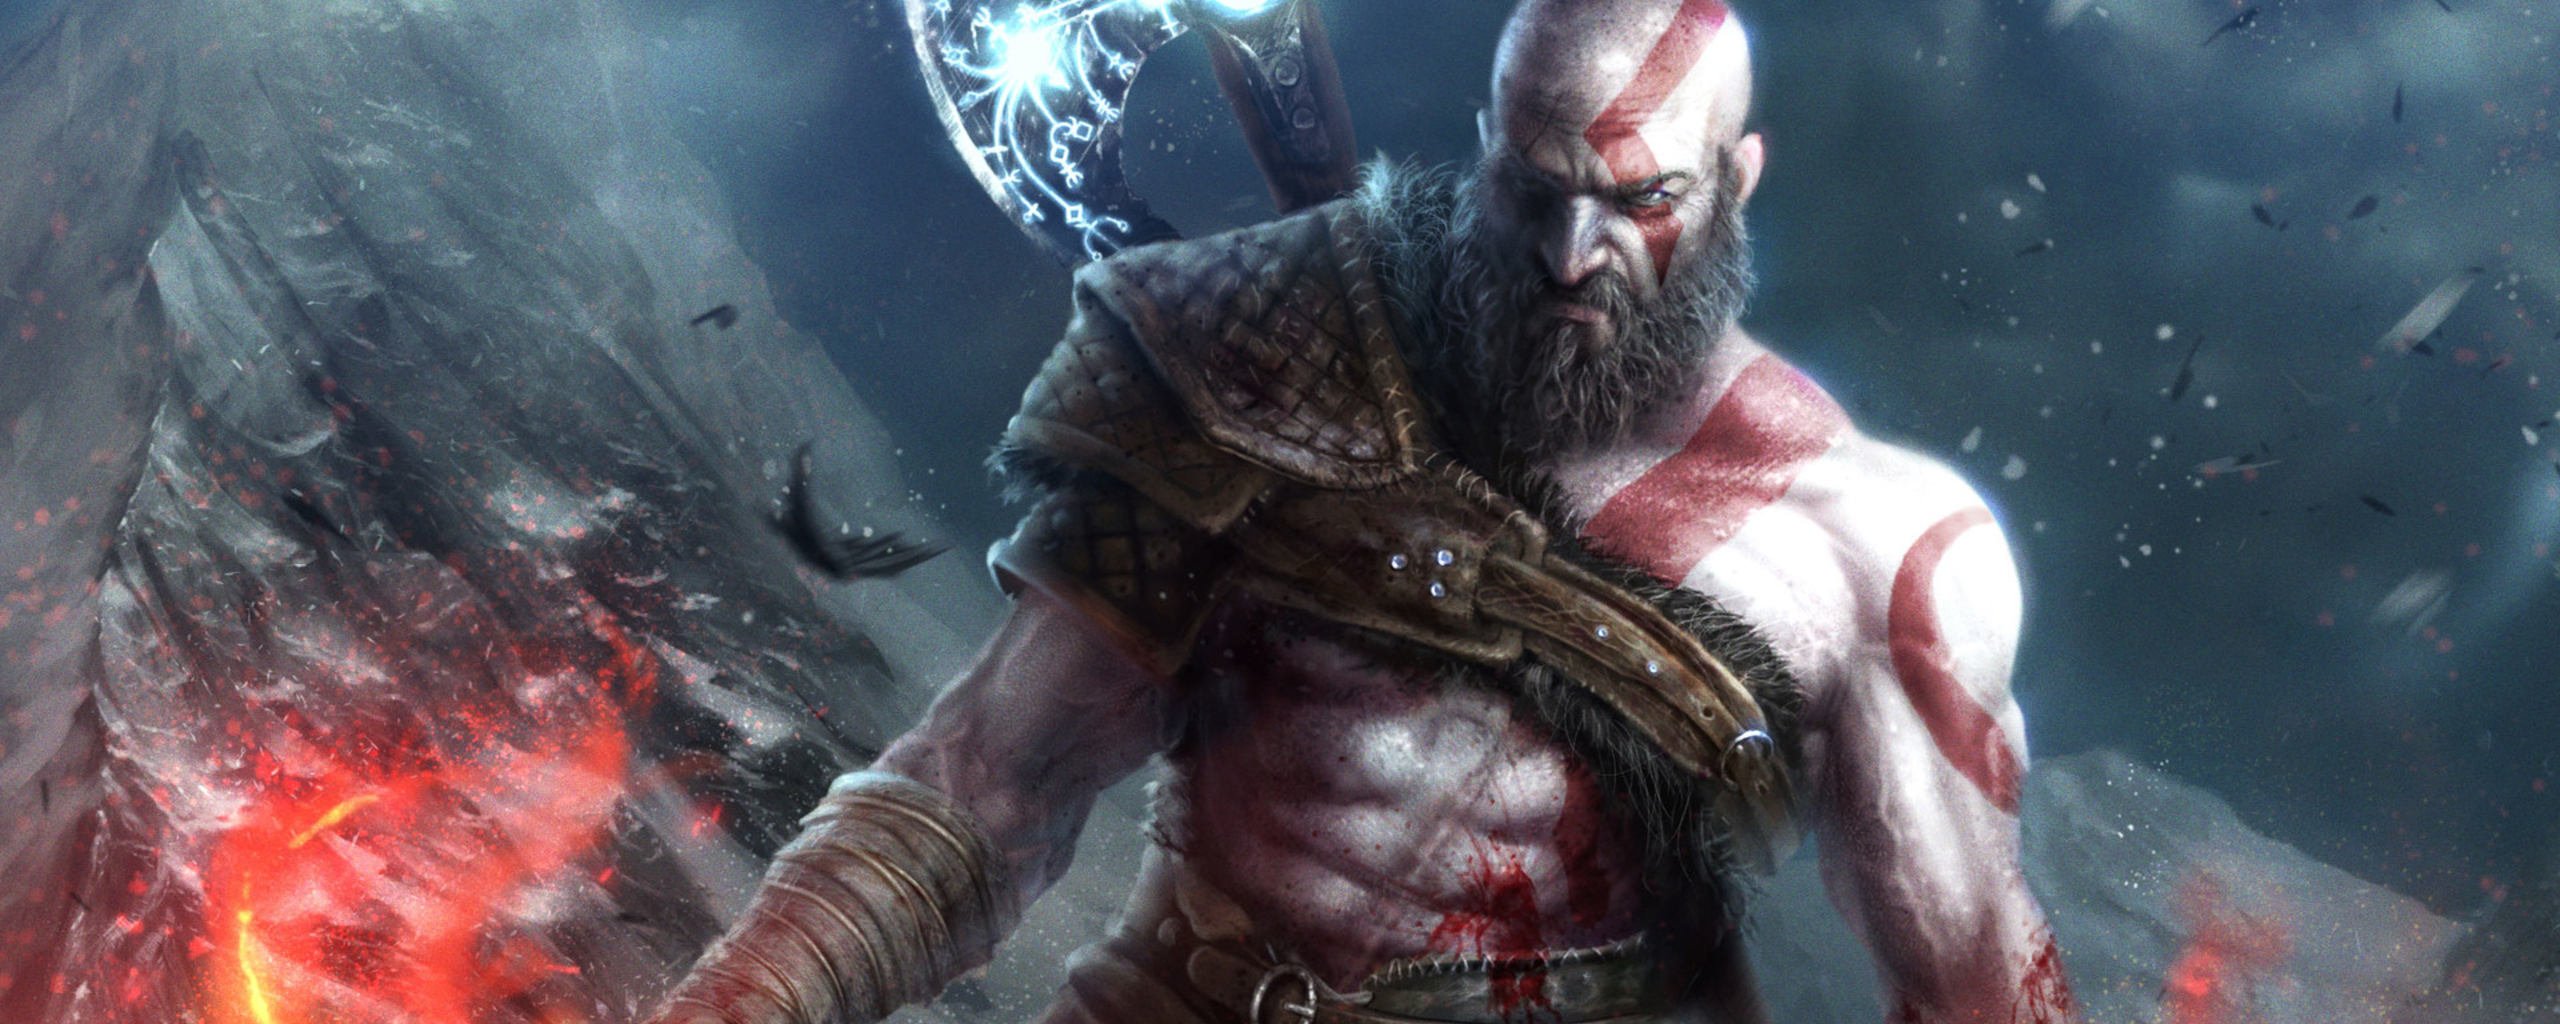 kratos-in-god-of-war-kt.jpg